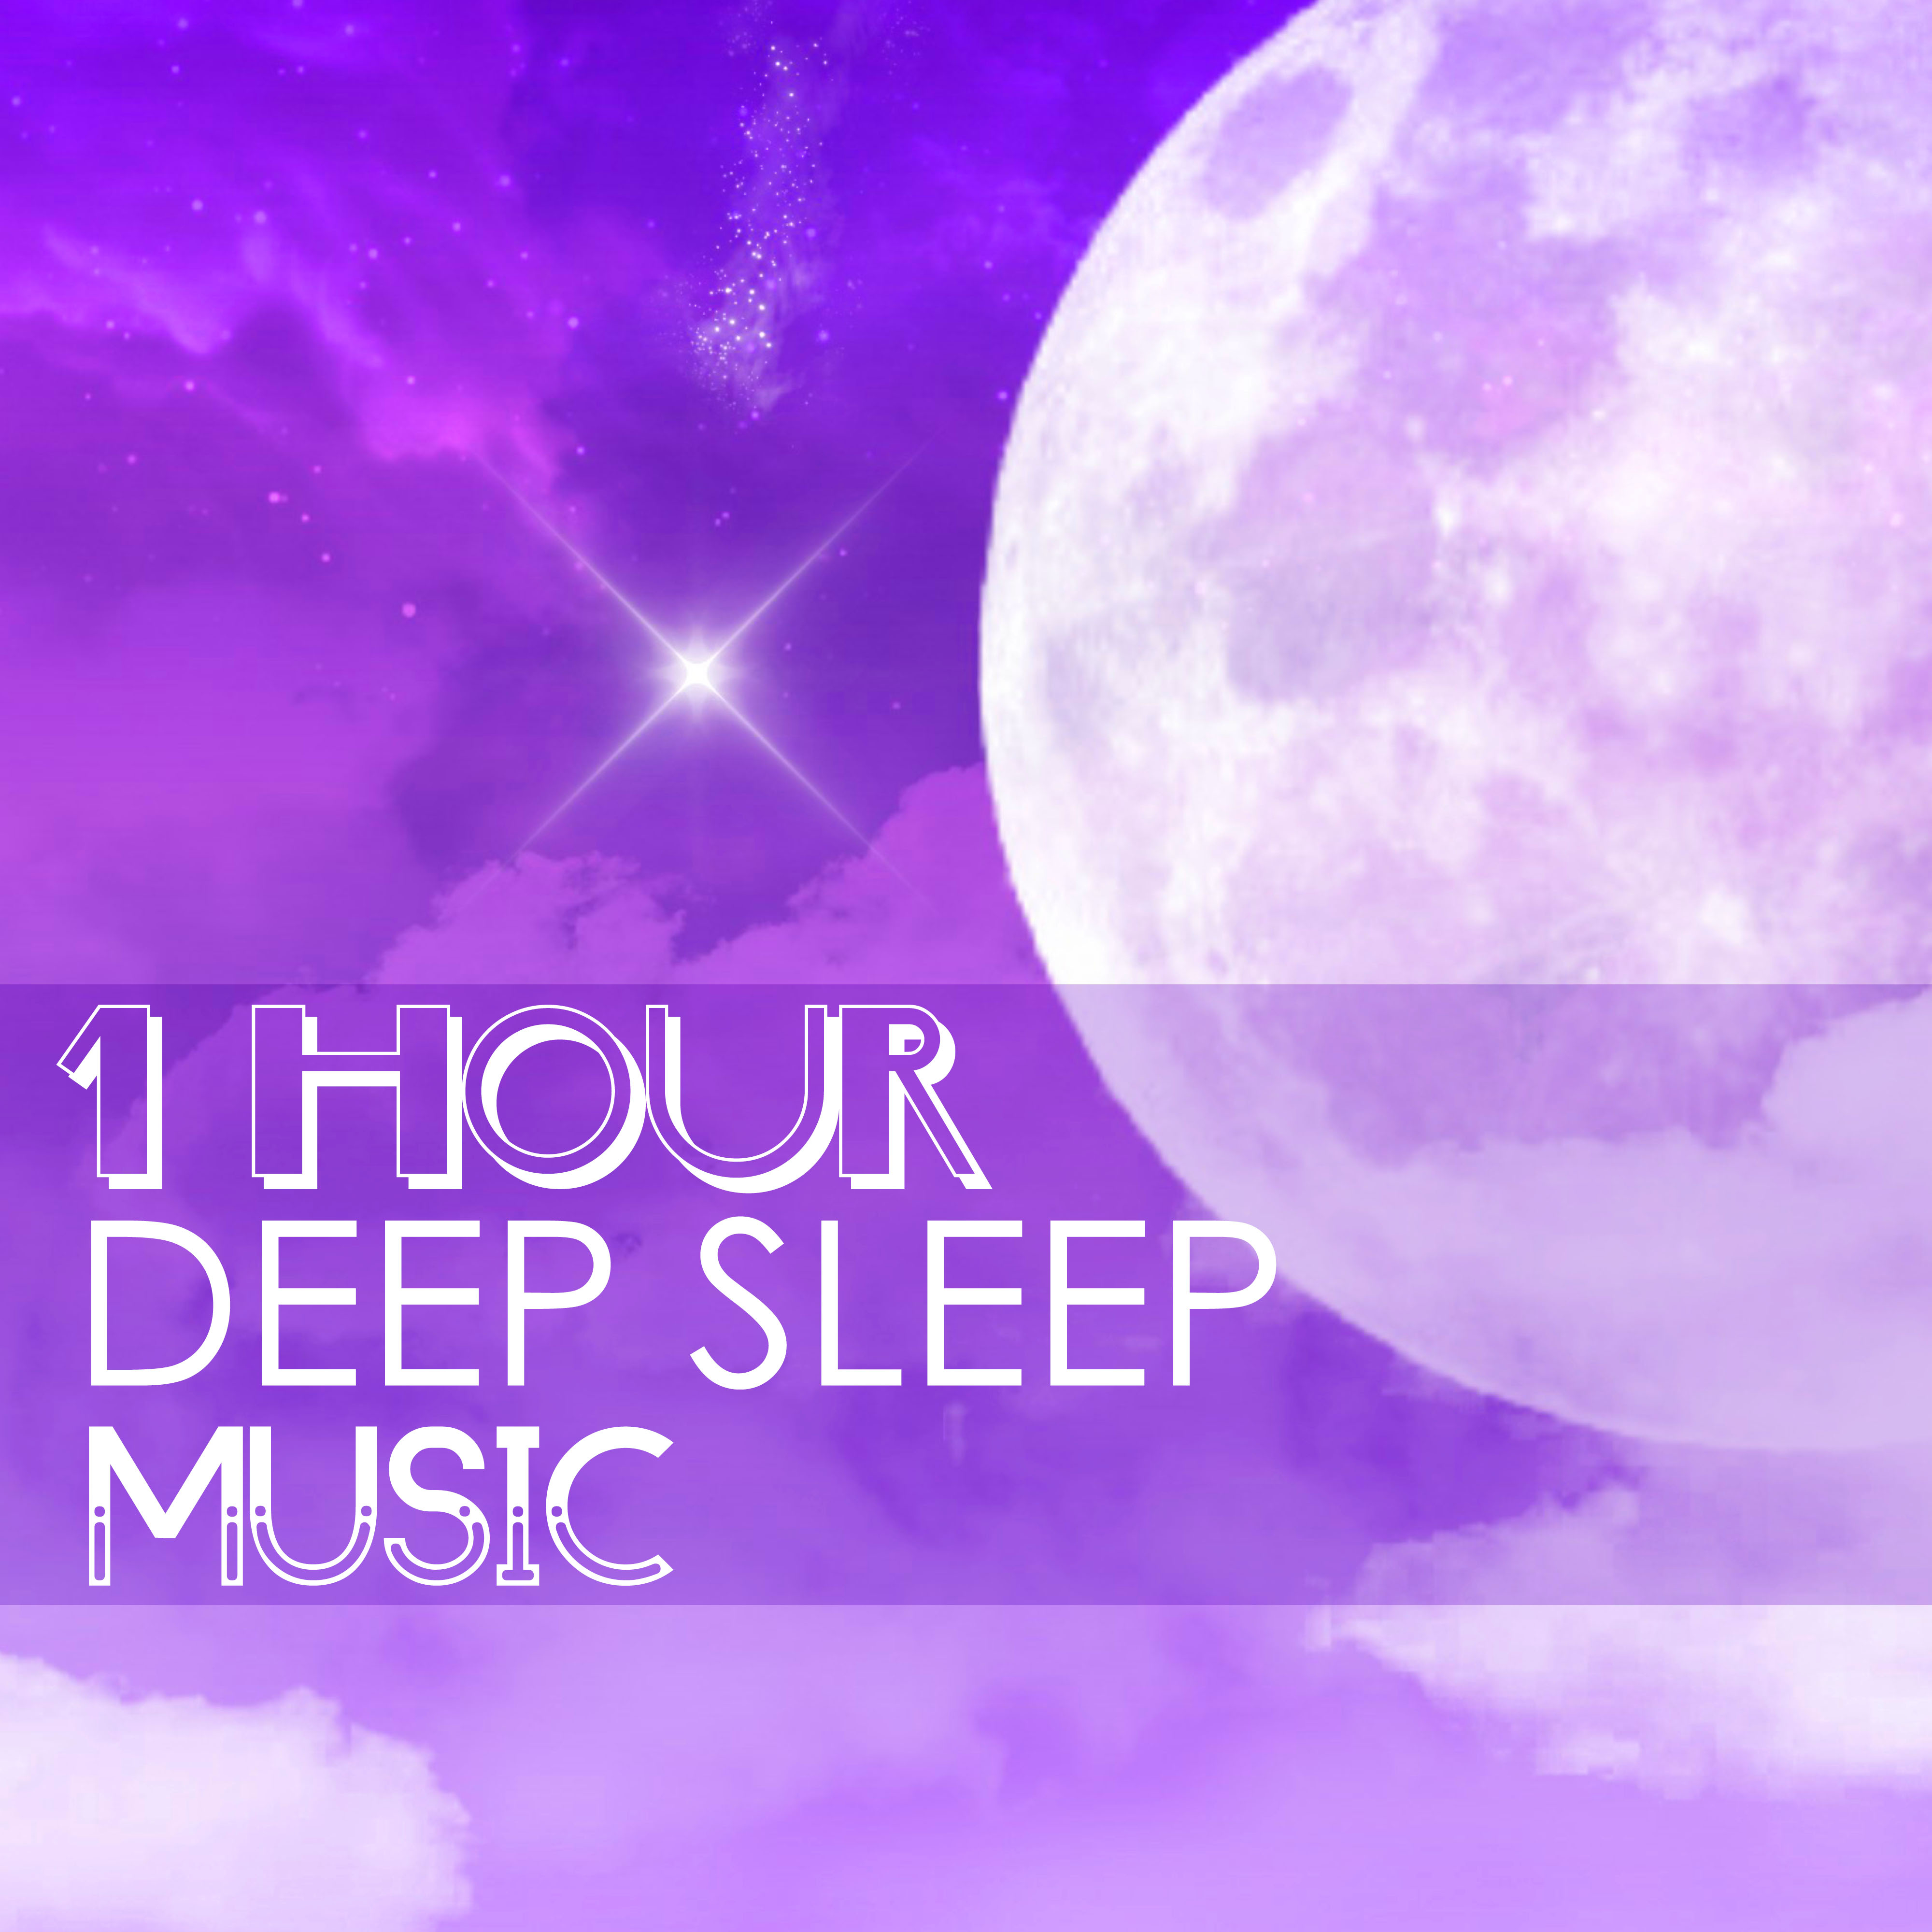 1 Hour Deep Sleep Music - REM Sleep Inducing Songs to Sleep All Night Long